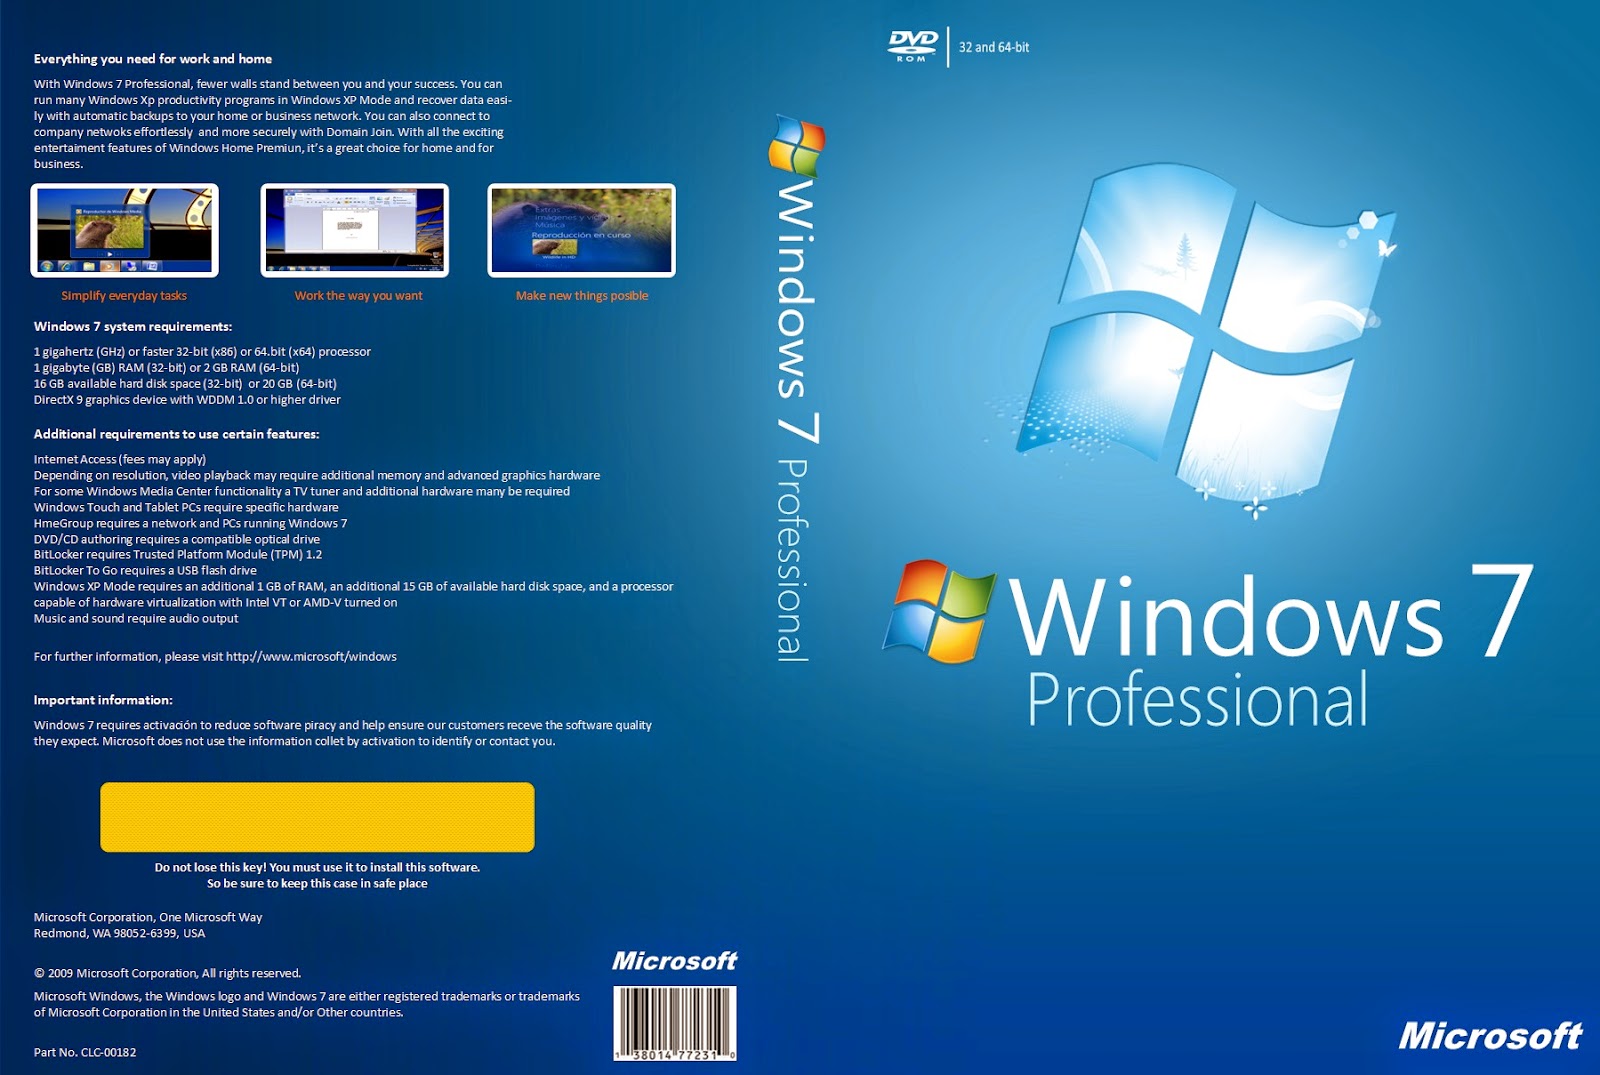 windows 7 free download 64 bit pc